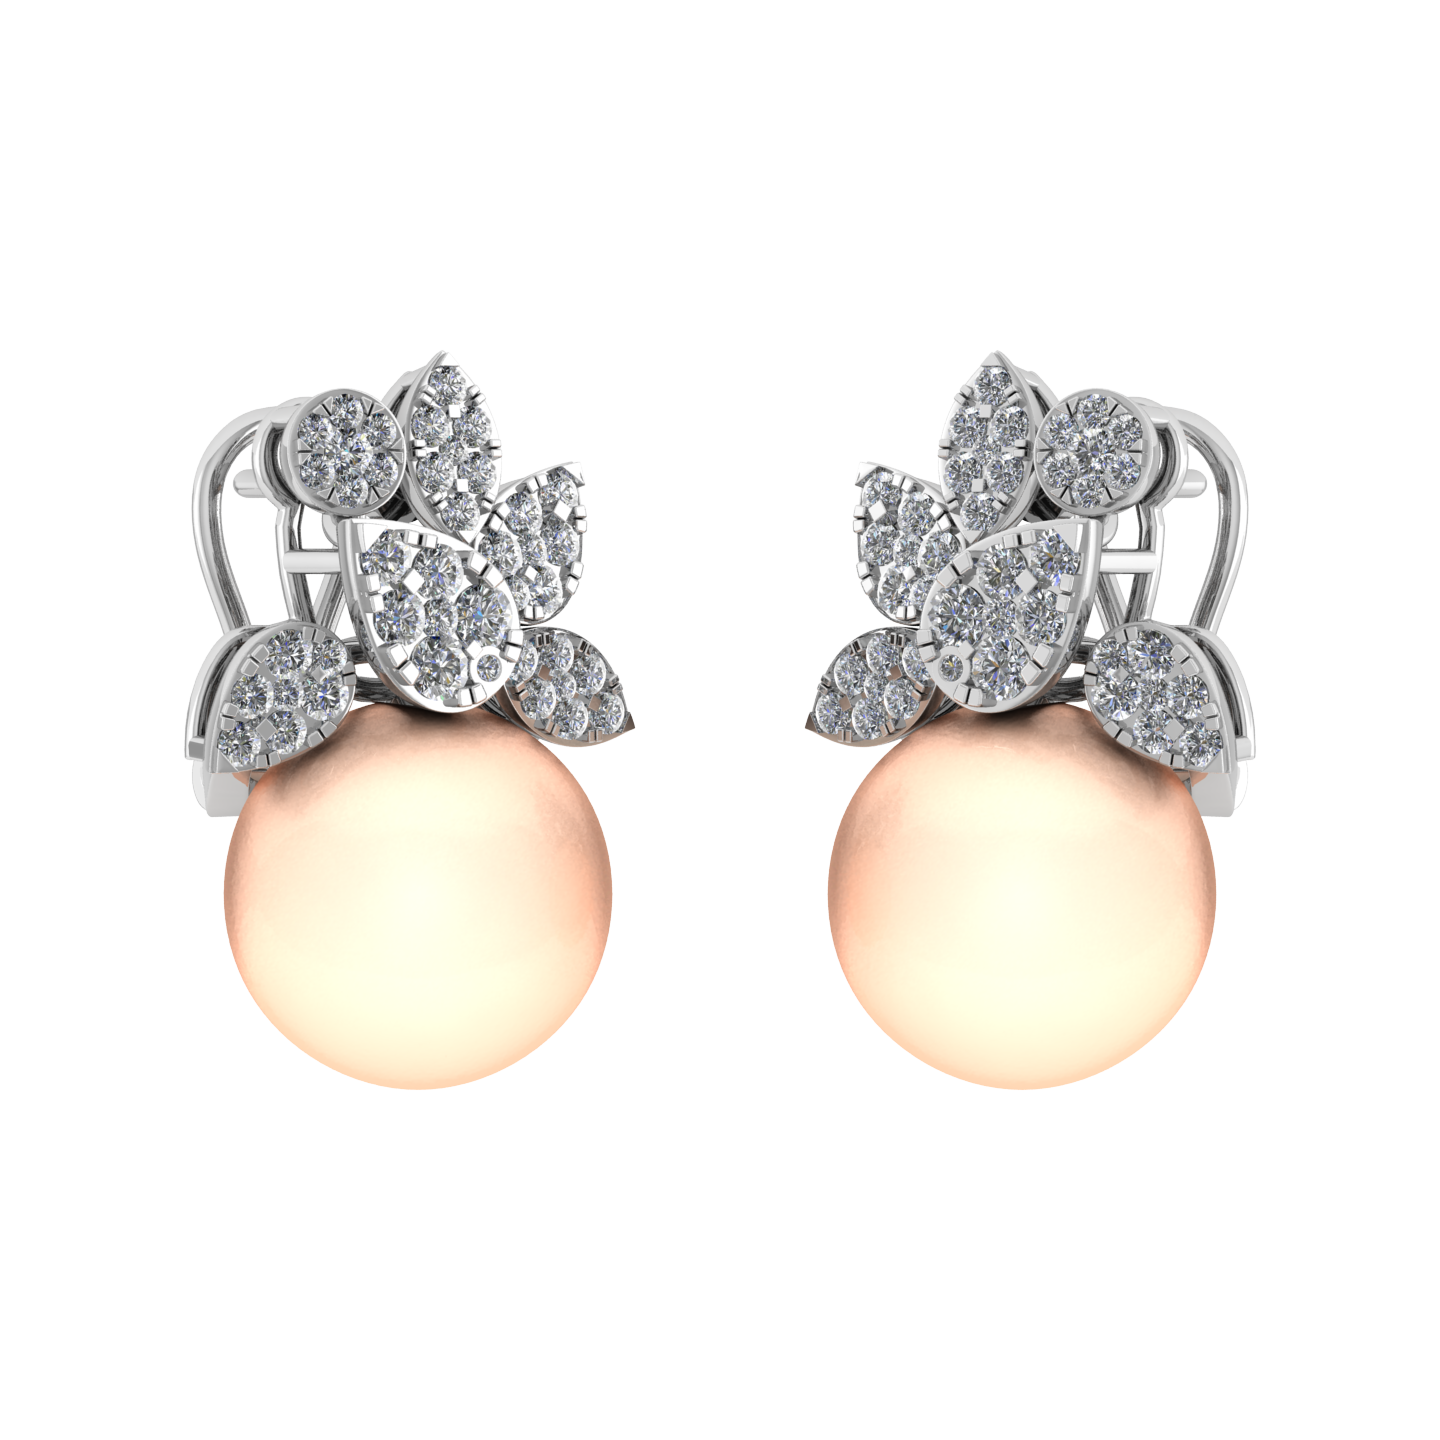 Natural Pearl and Diamond Wedding Earrings - JN030609-ER47